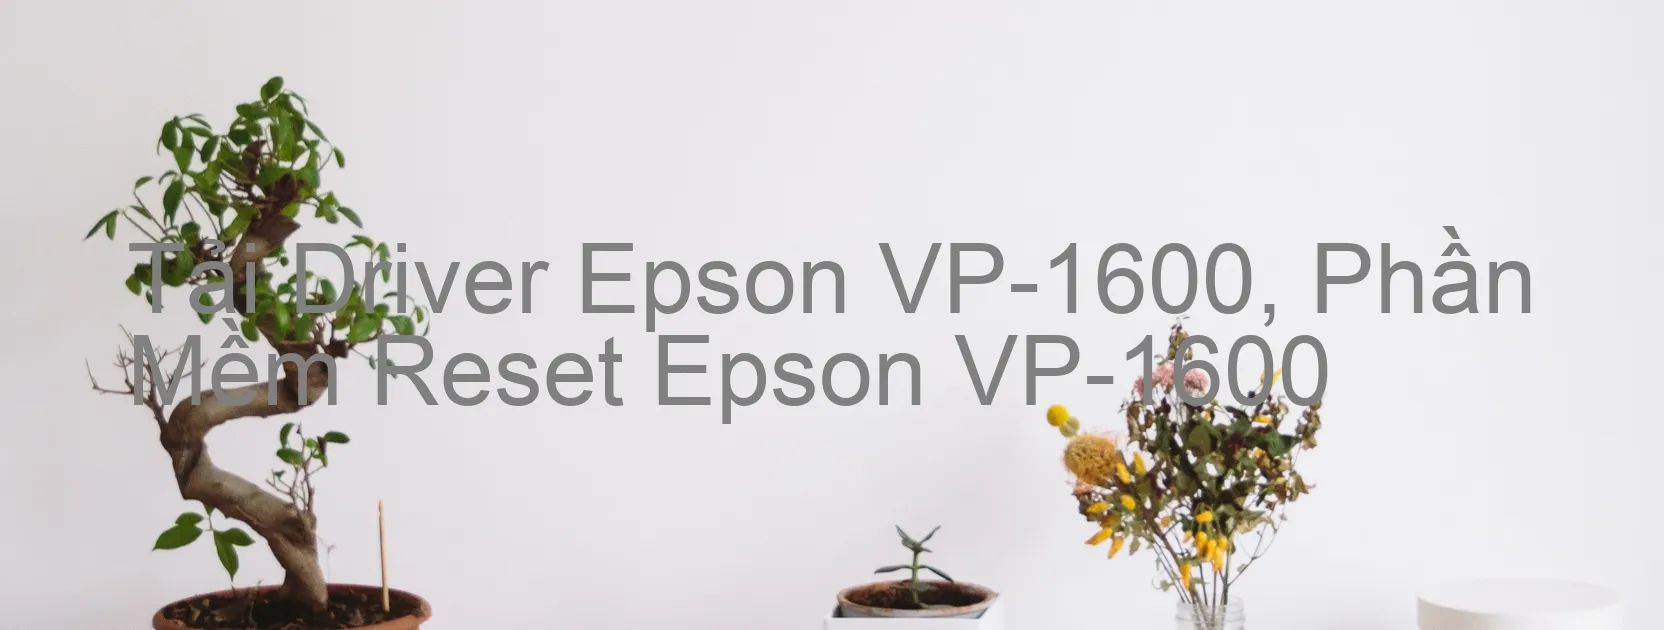 Driver Epson VP-1600, Phần Mềm Reset Epson VP-1600